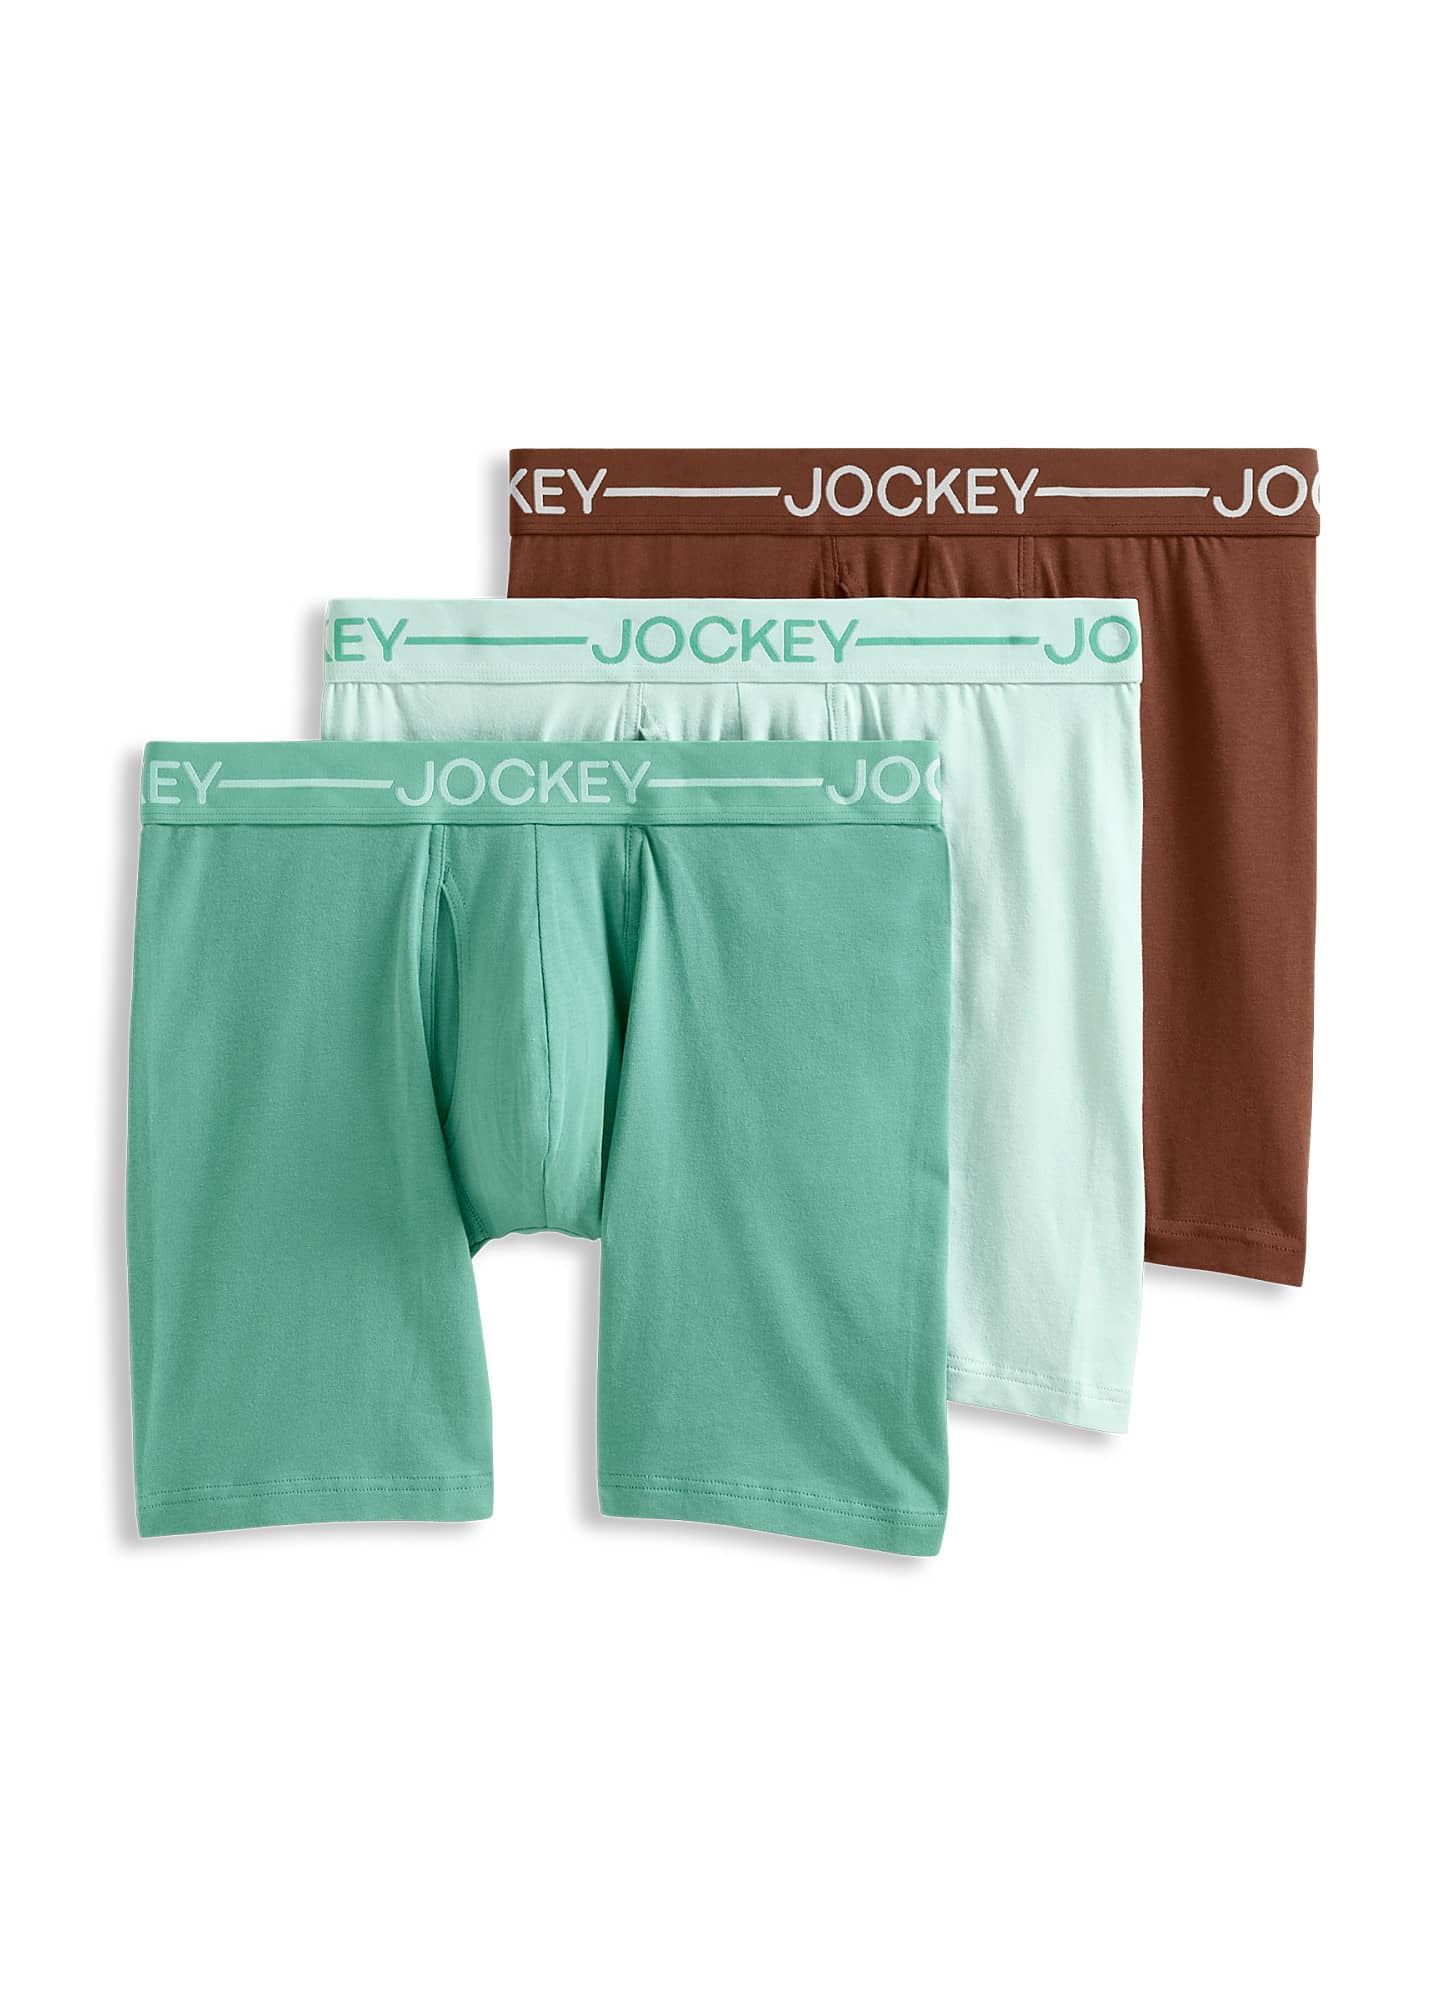 Jockey Men's Underwear Organic Cotton Stretch Brief - 3 Pack, Black, S at   Men's Clothing store